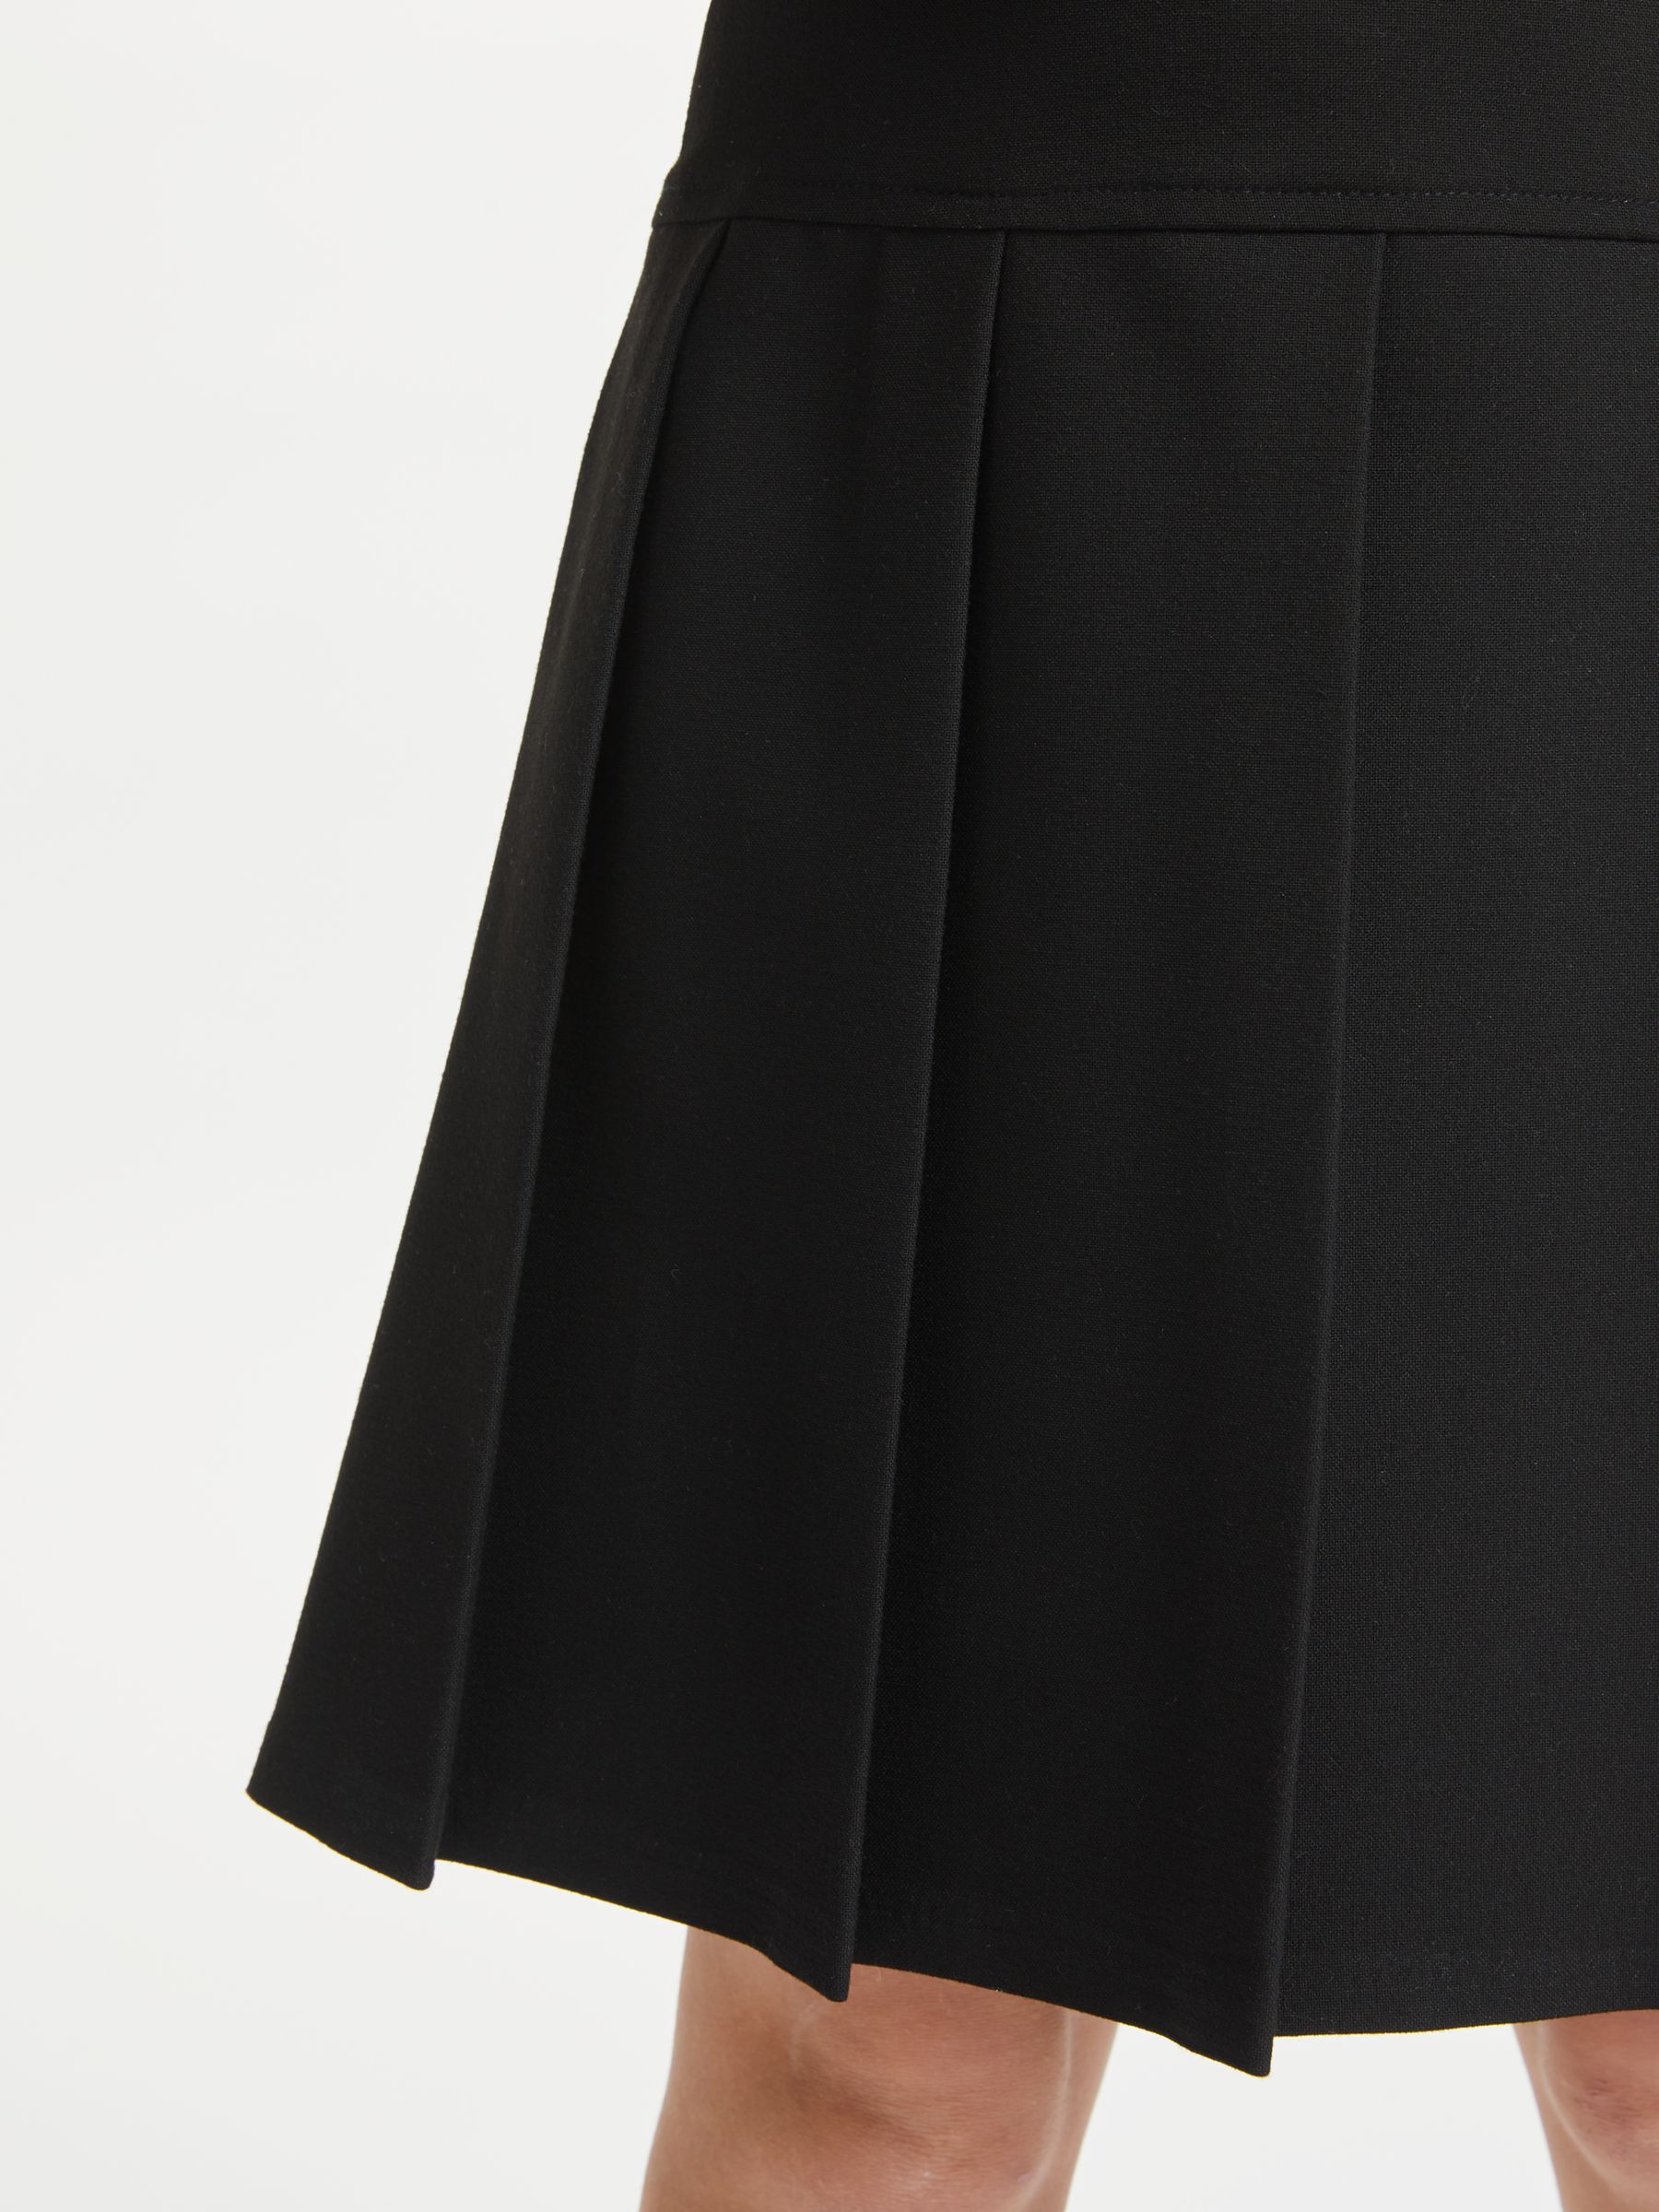 Richmond School Girls Black Designer Pleated Skirt (Compulsory